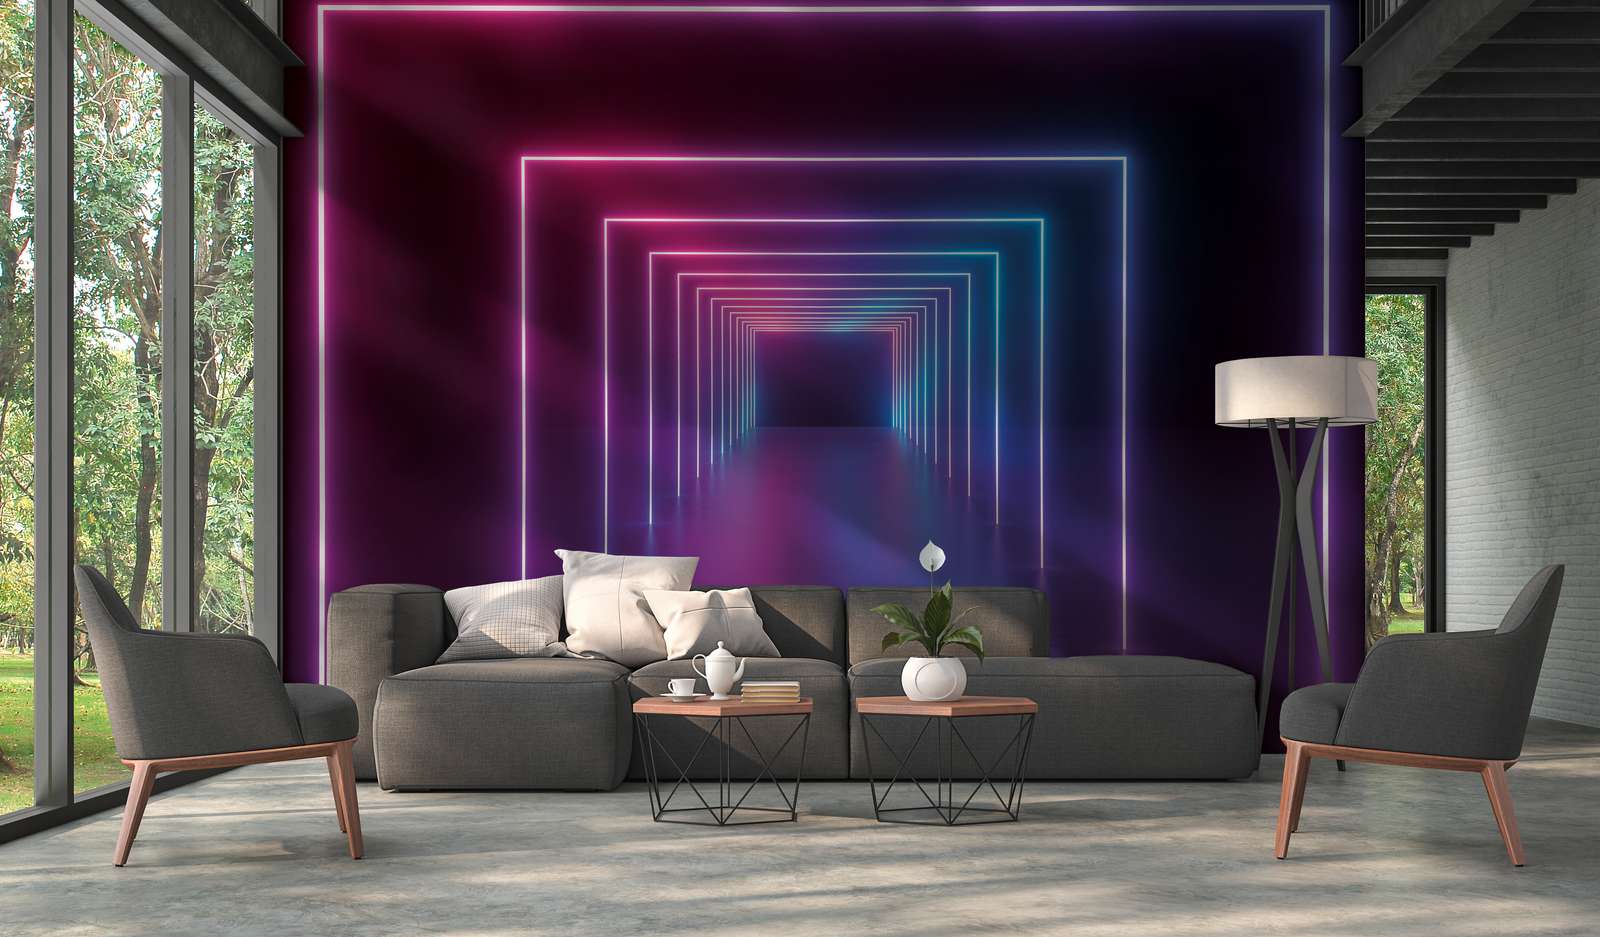             Digital behang Kamer met lange gang LED kleuren - Paars, Blauw, Neon
        